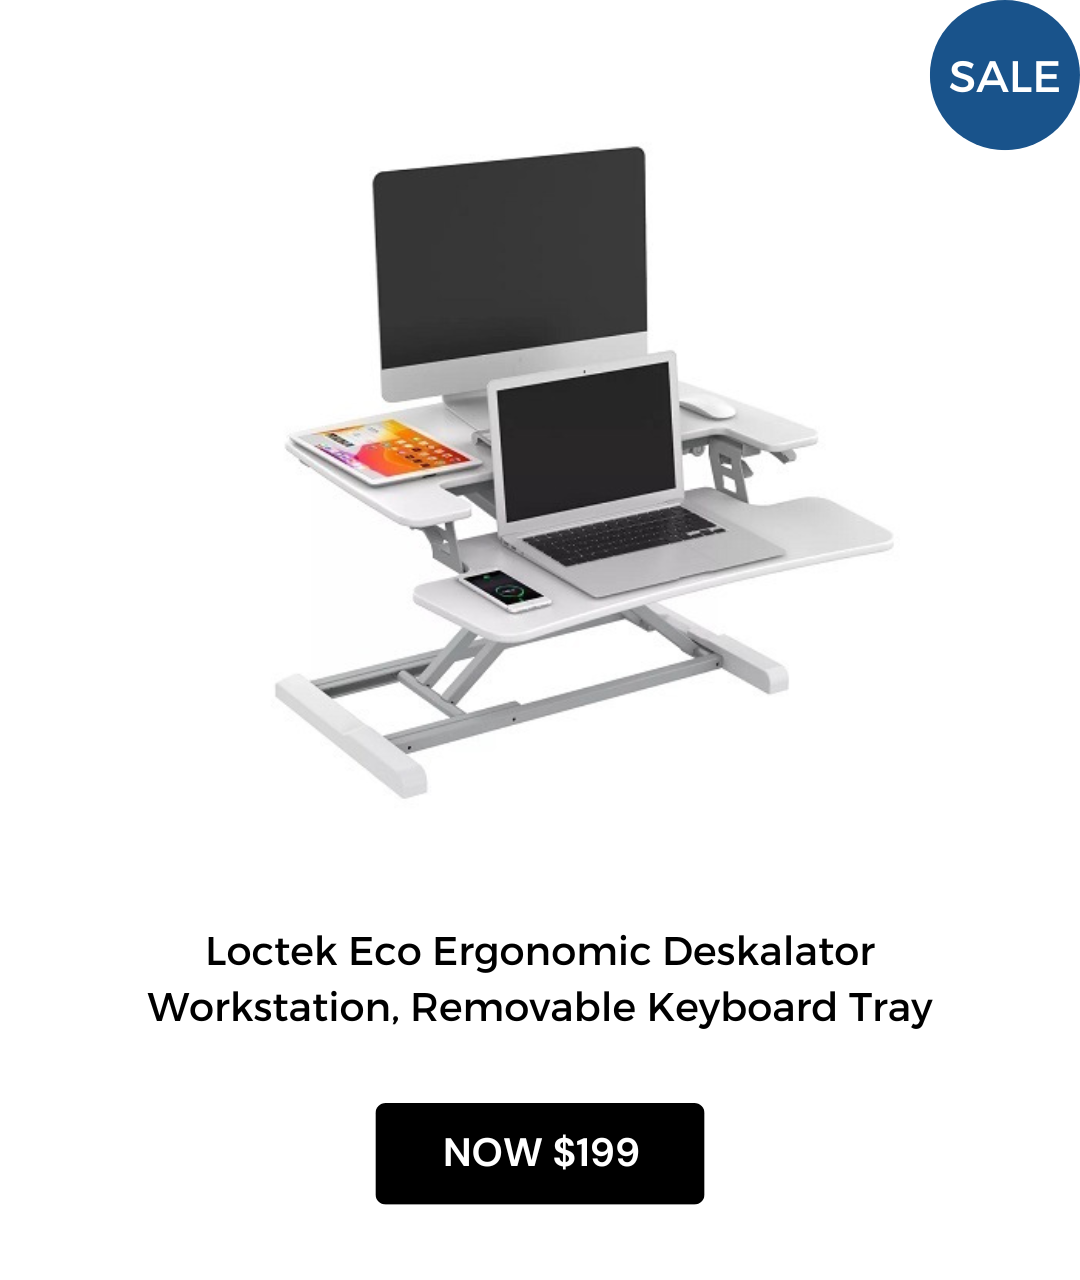 Loctek Eco Ergonomic Deskalator Workstation, Removable Keyboard Tray, 720x415mm, White